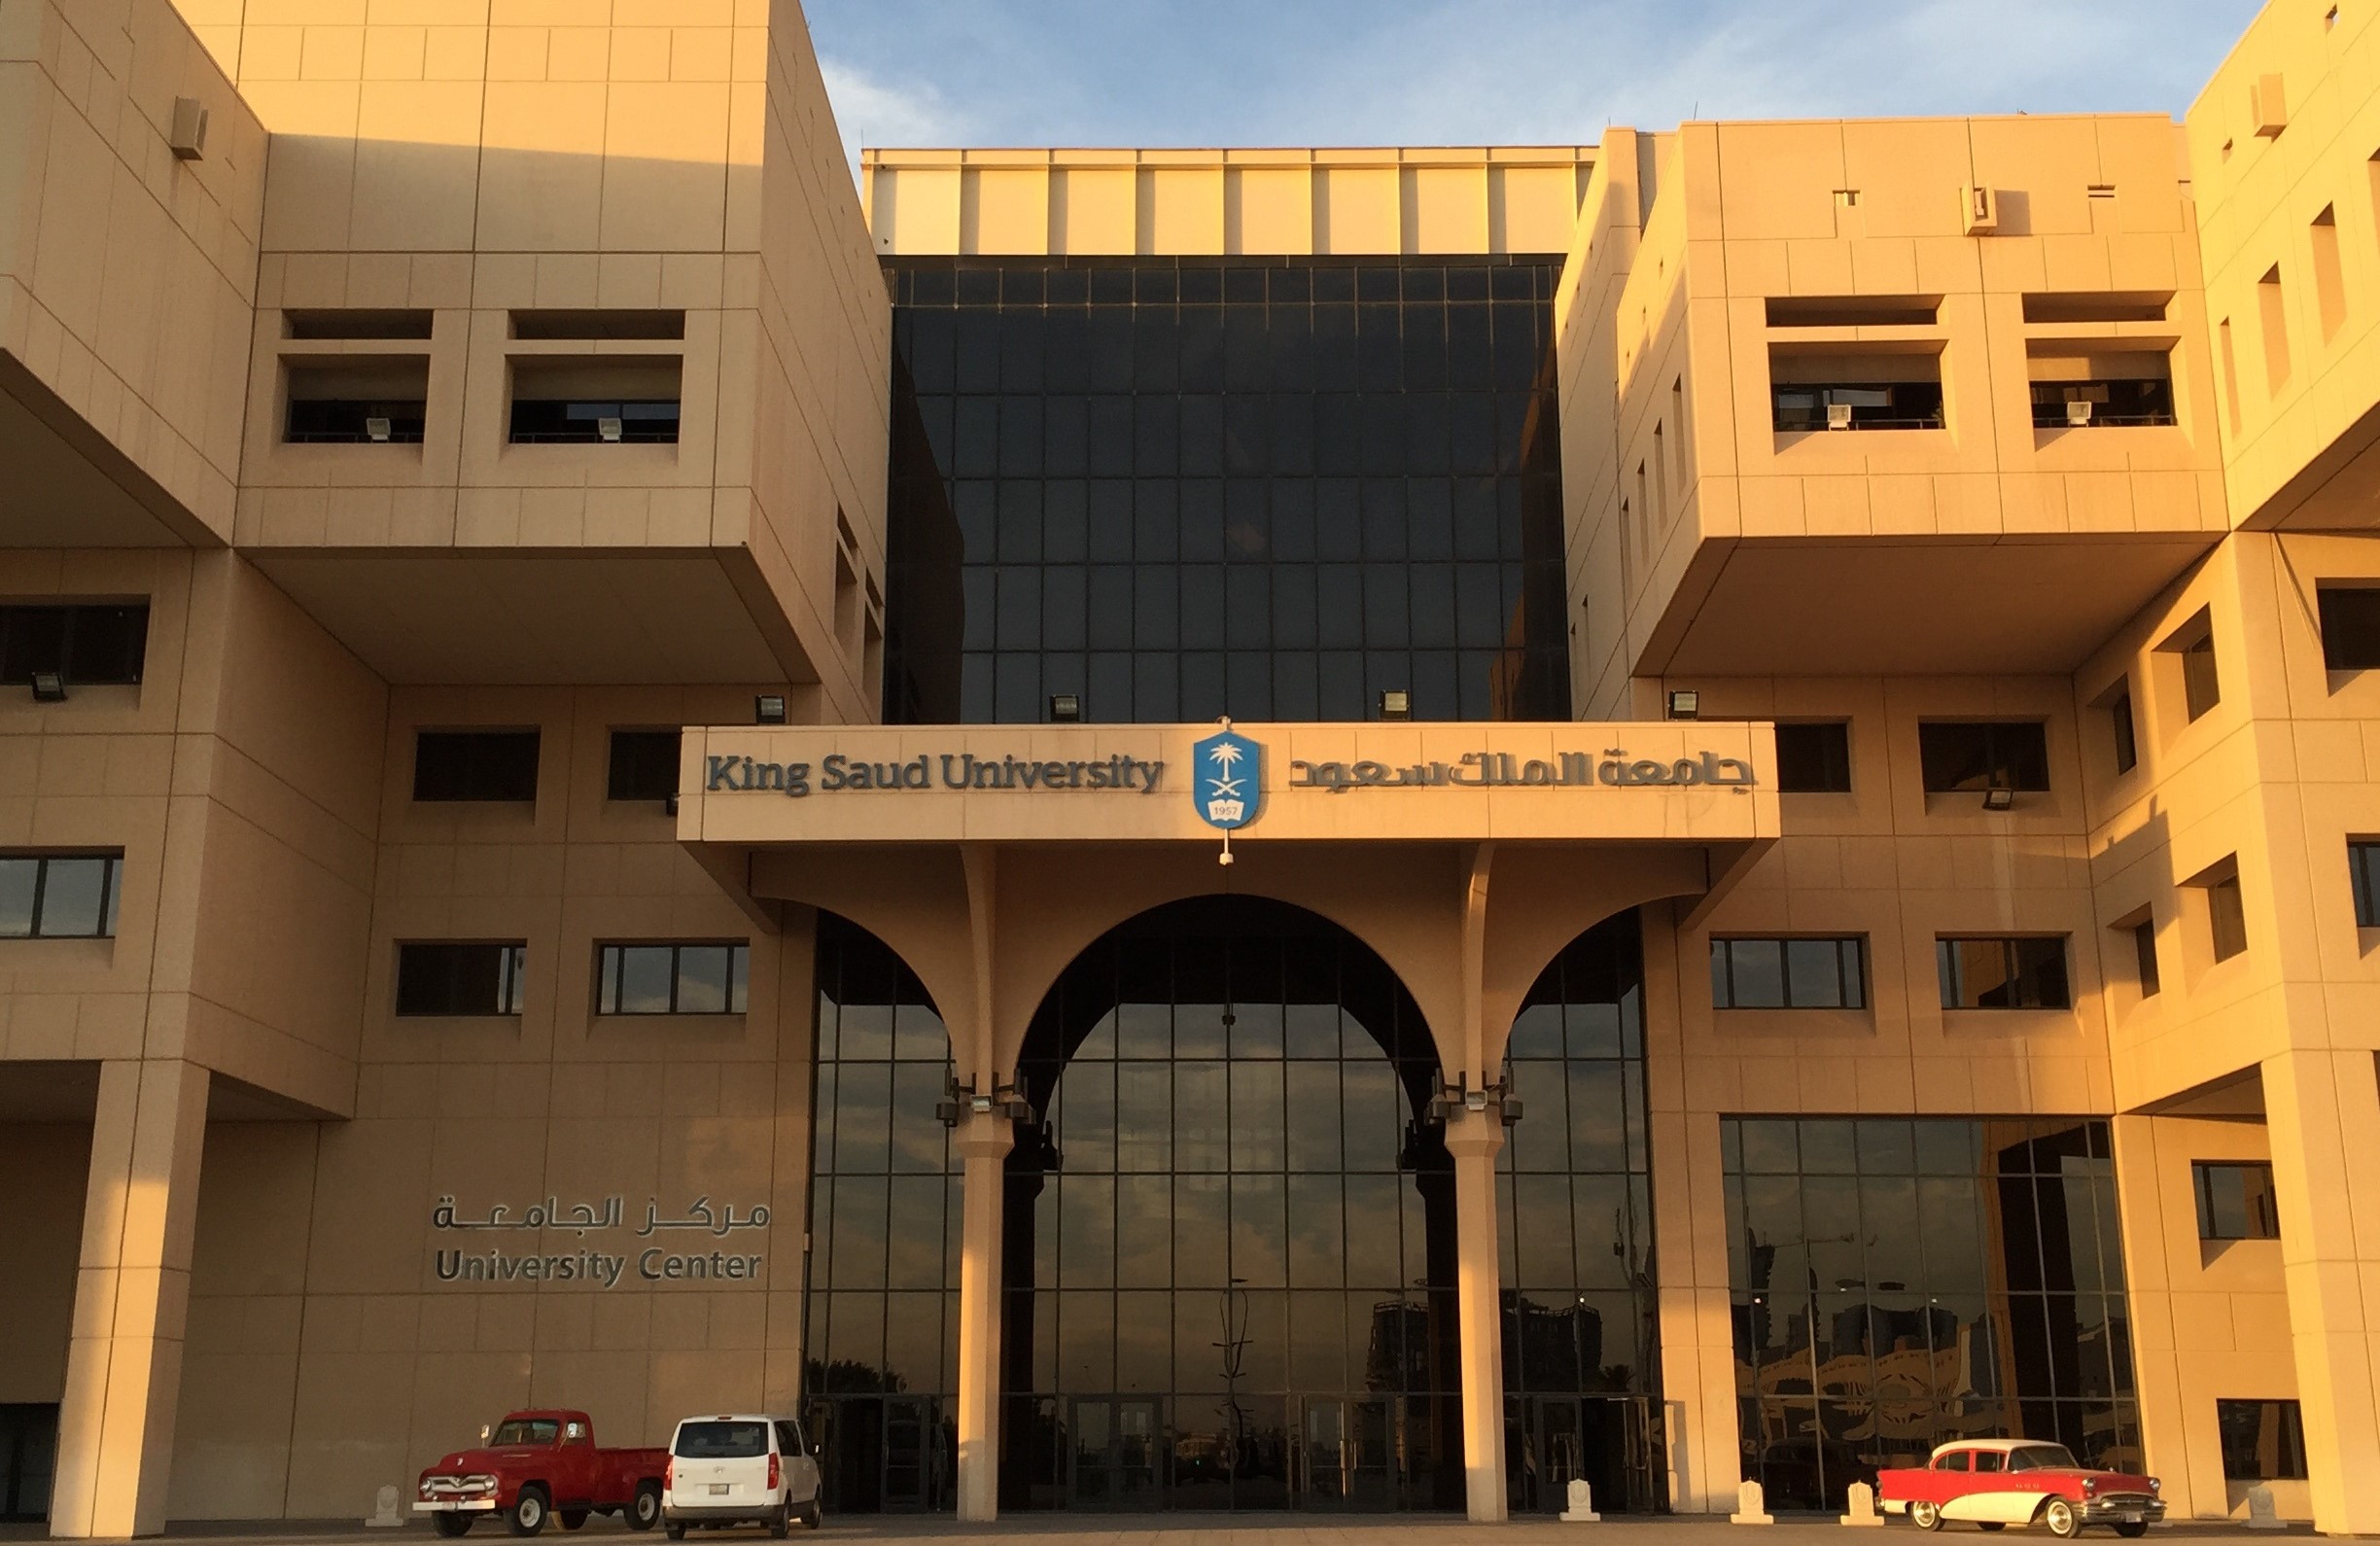 Building B70 project, King Saud University